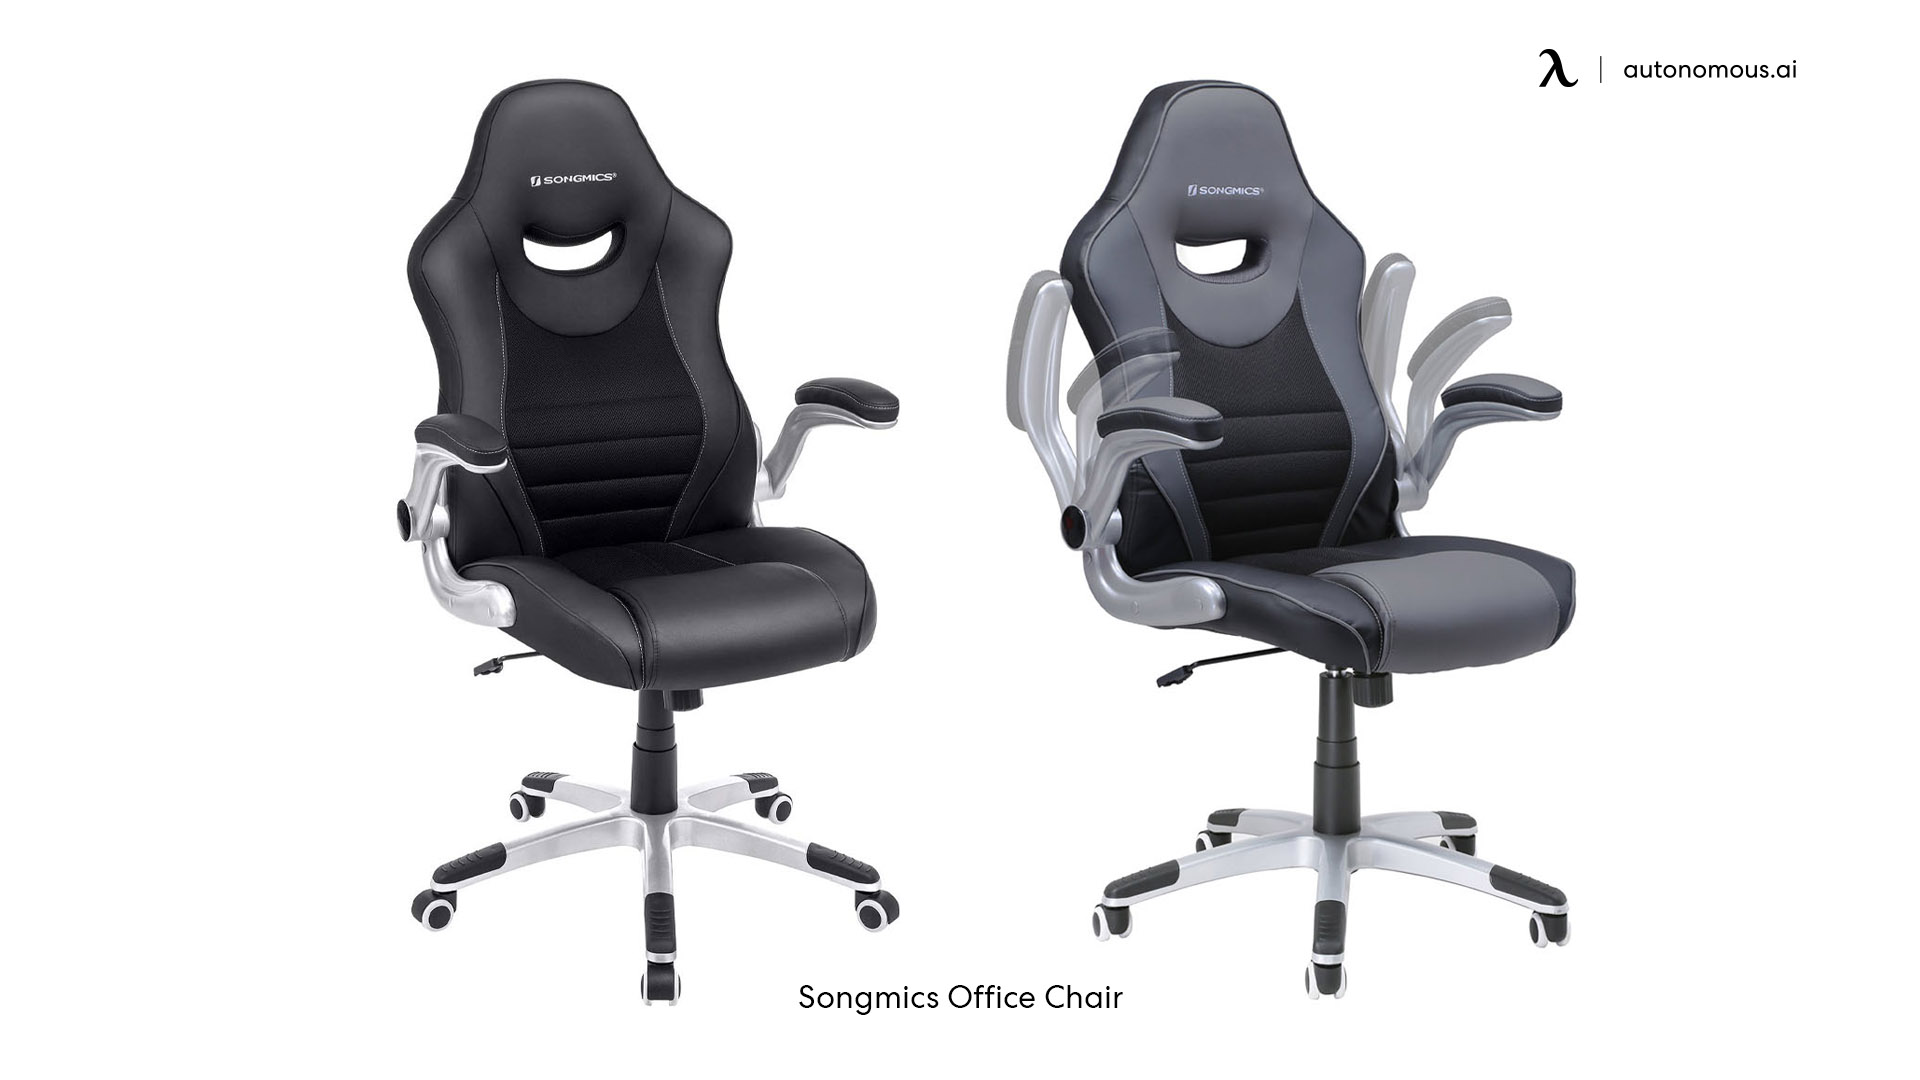 Songmics Office Chair